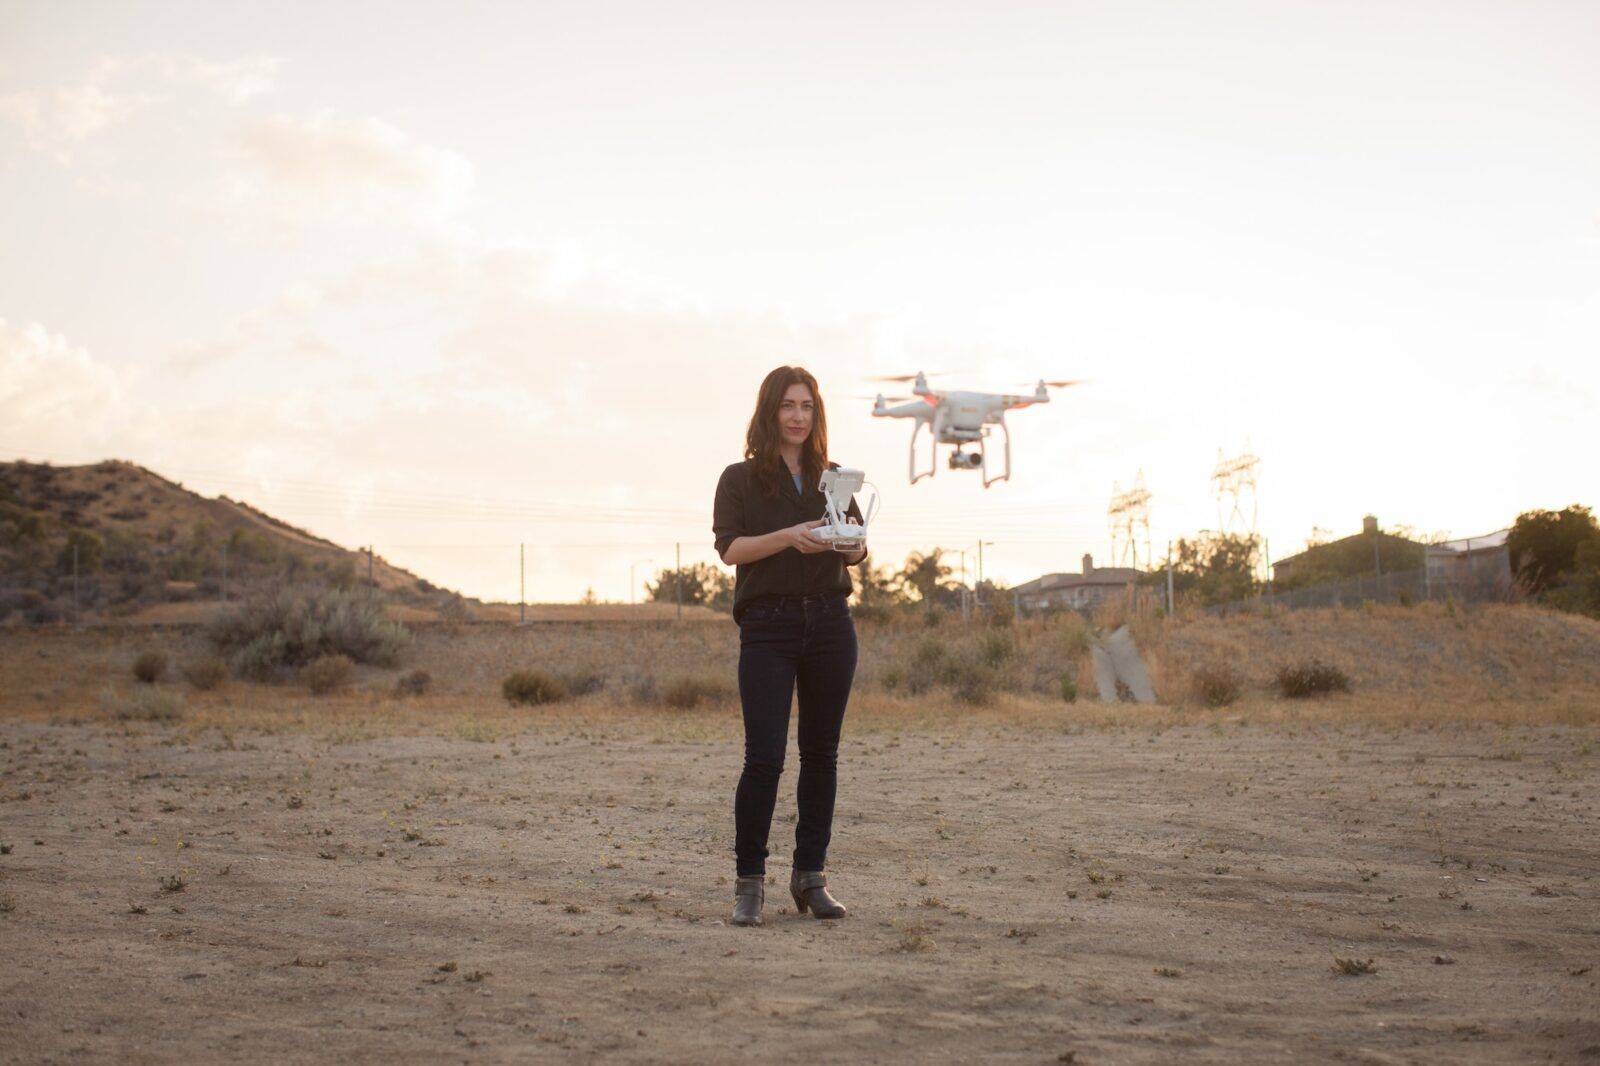 Female commercial operator on scrubland flying drone, Santa Clarita, California, USA